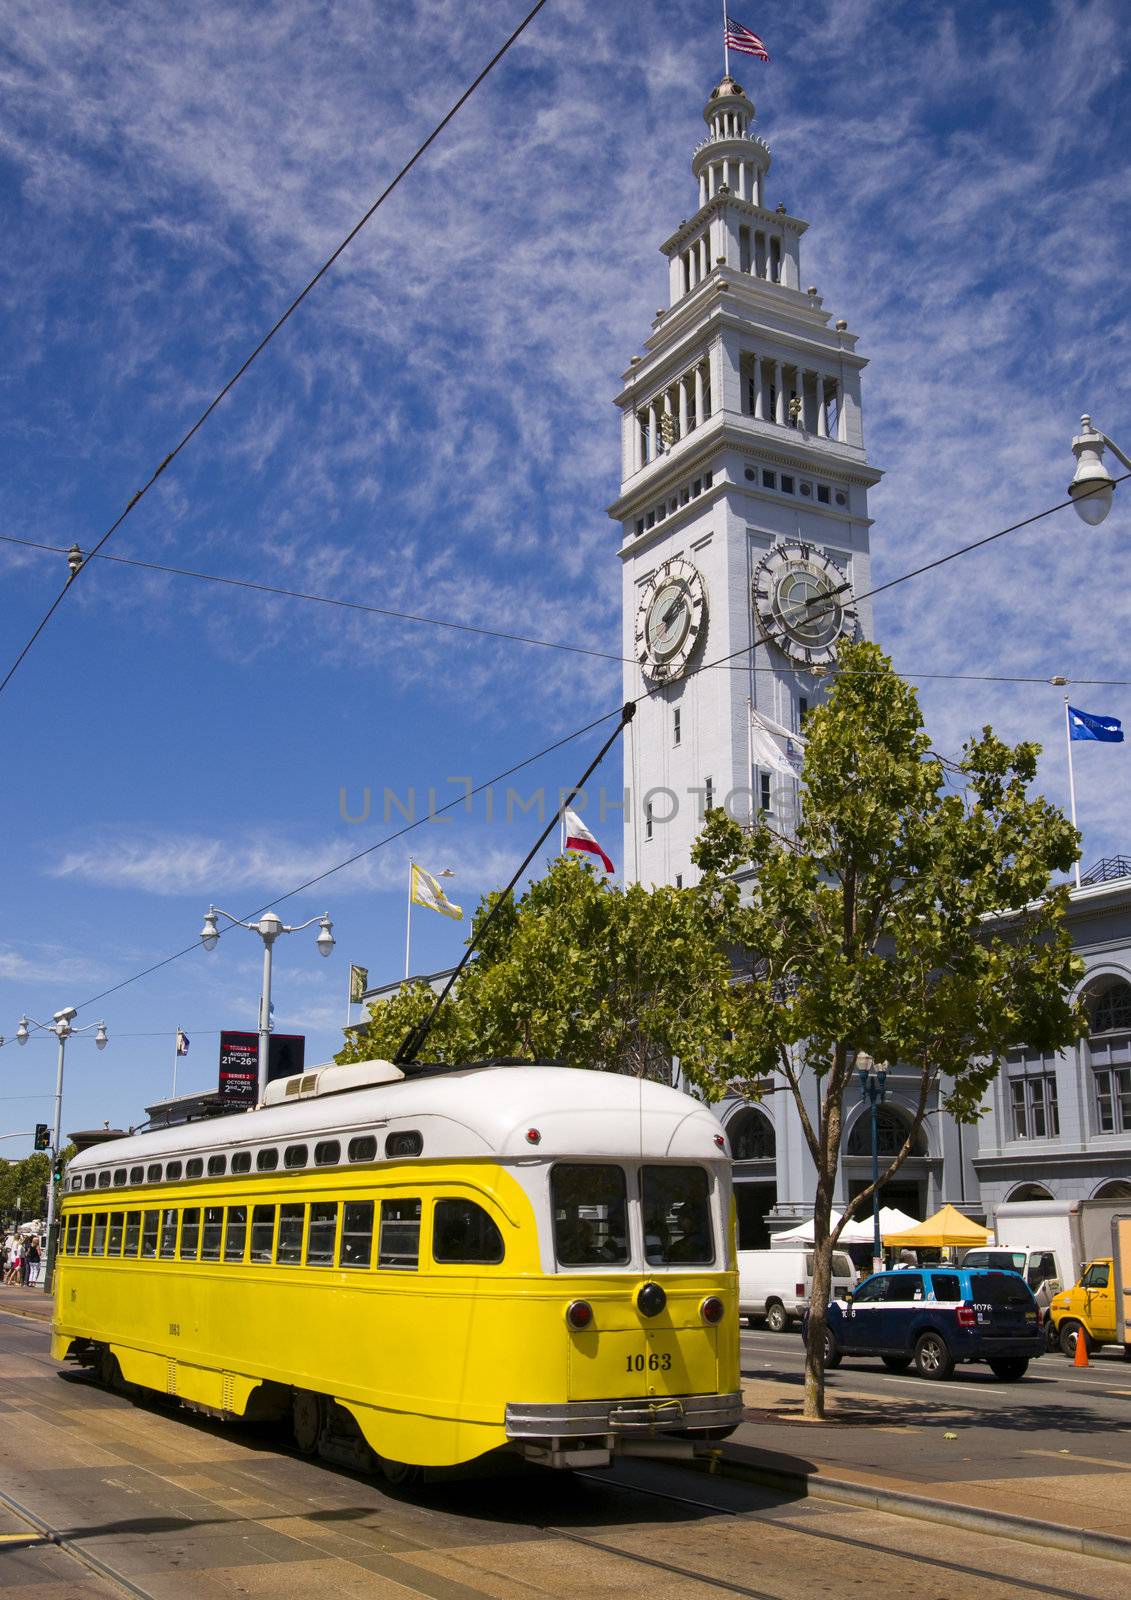 San Francisco Trolley Car moves through the street in San Francisco